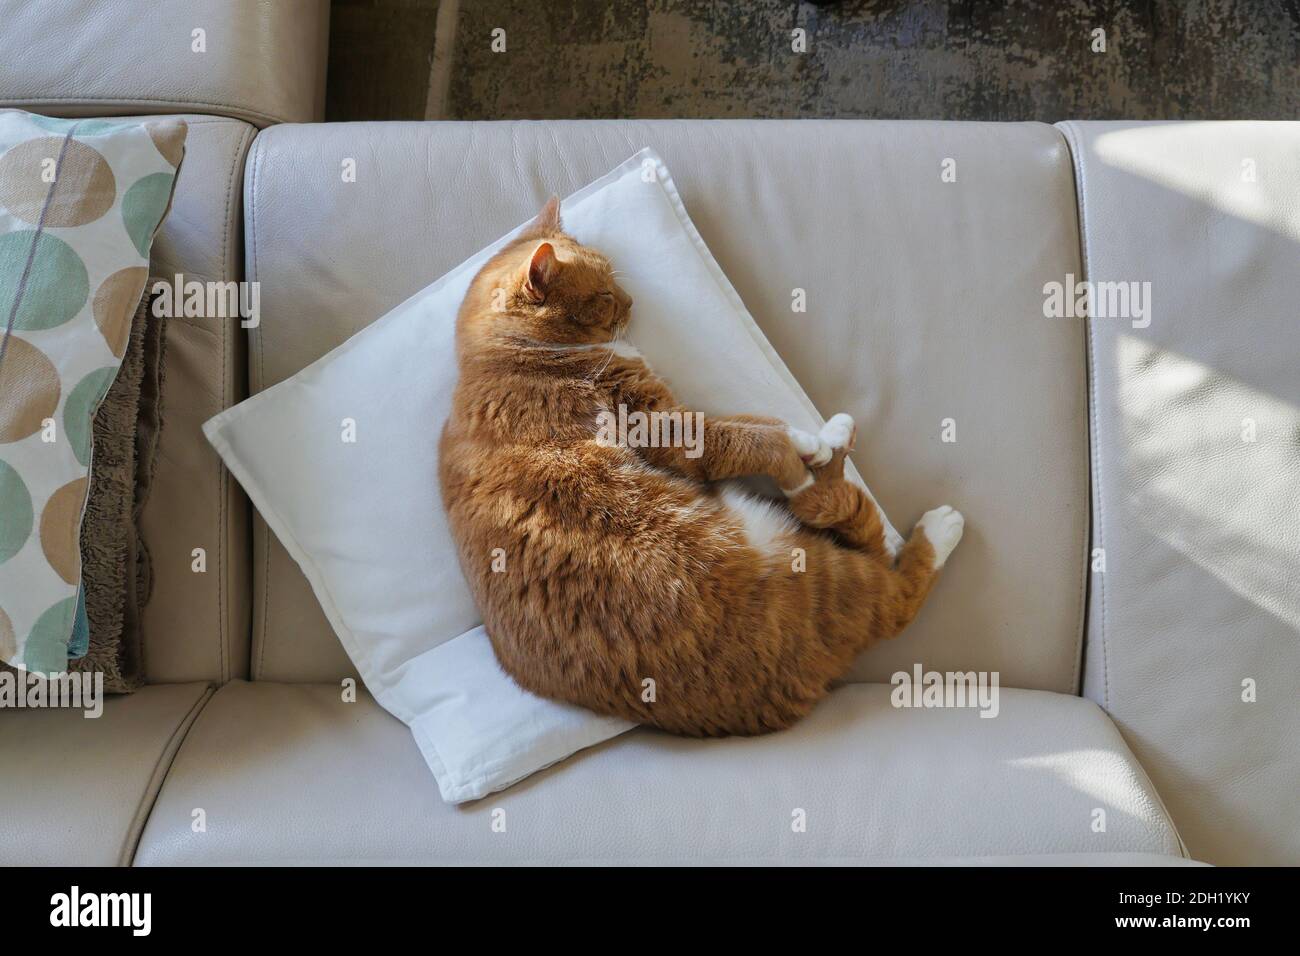 Tabby house cat sleeping on sofa cushion. Overhead shot. Stock Photo